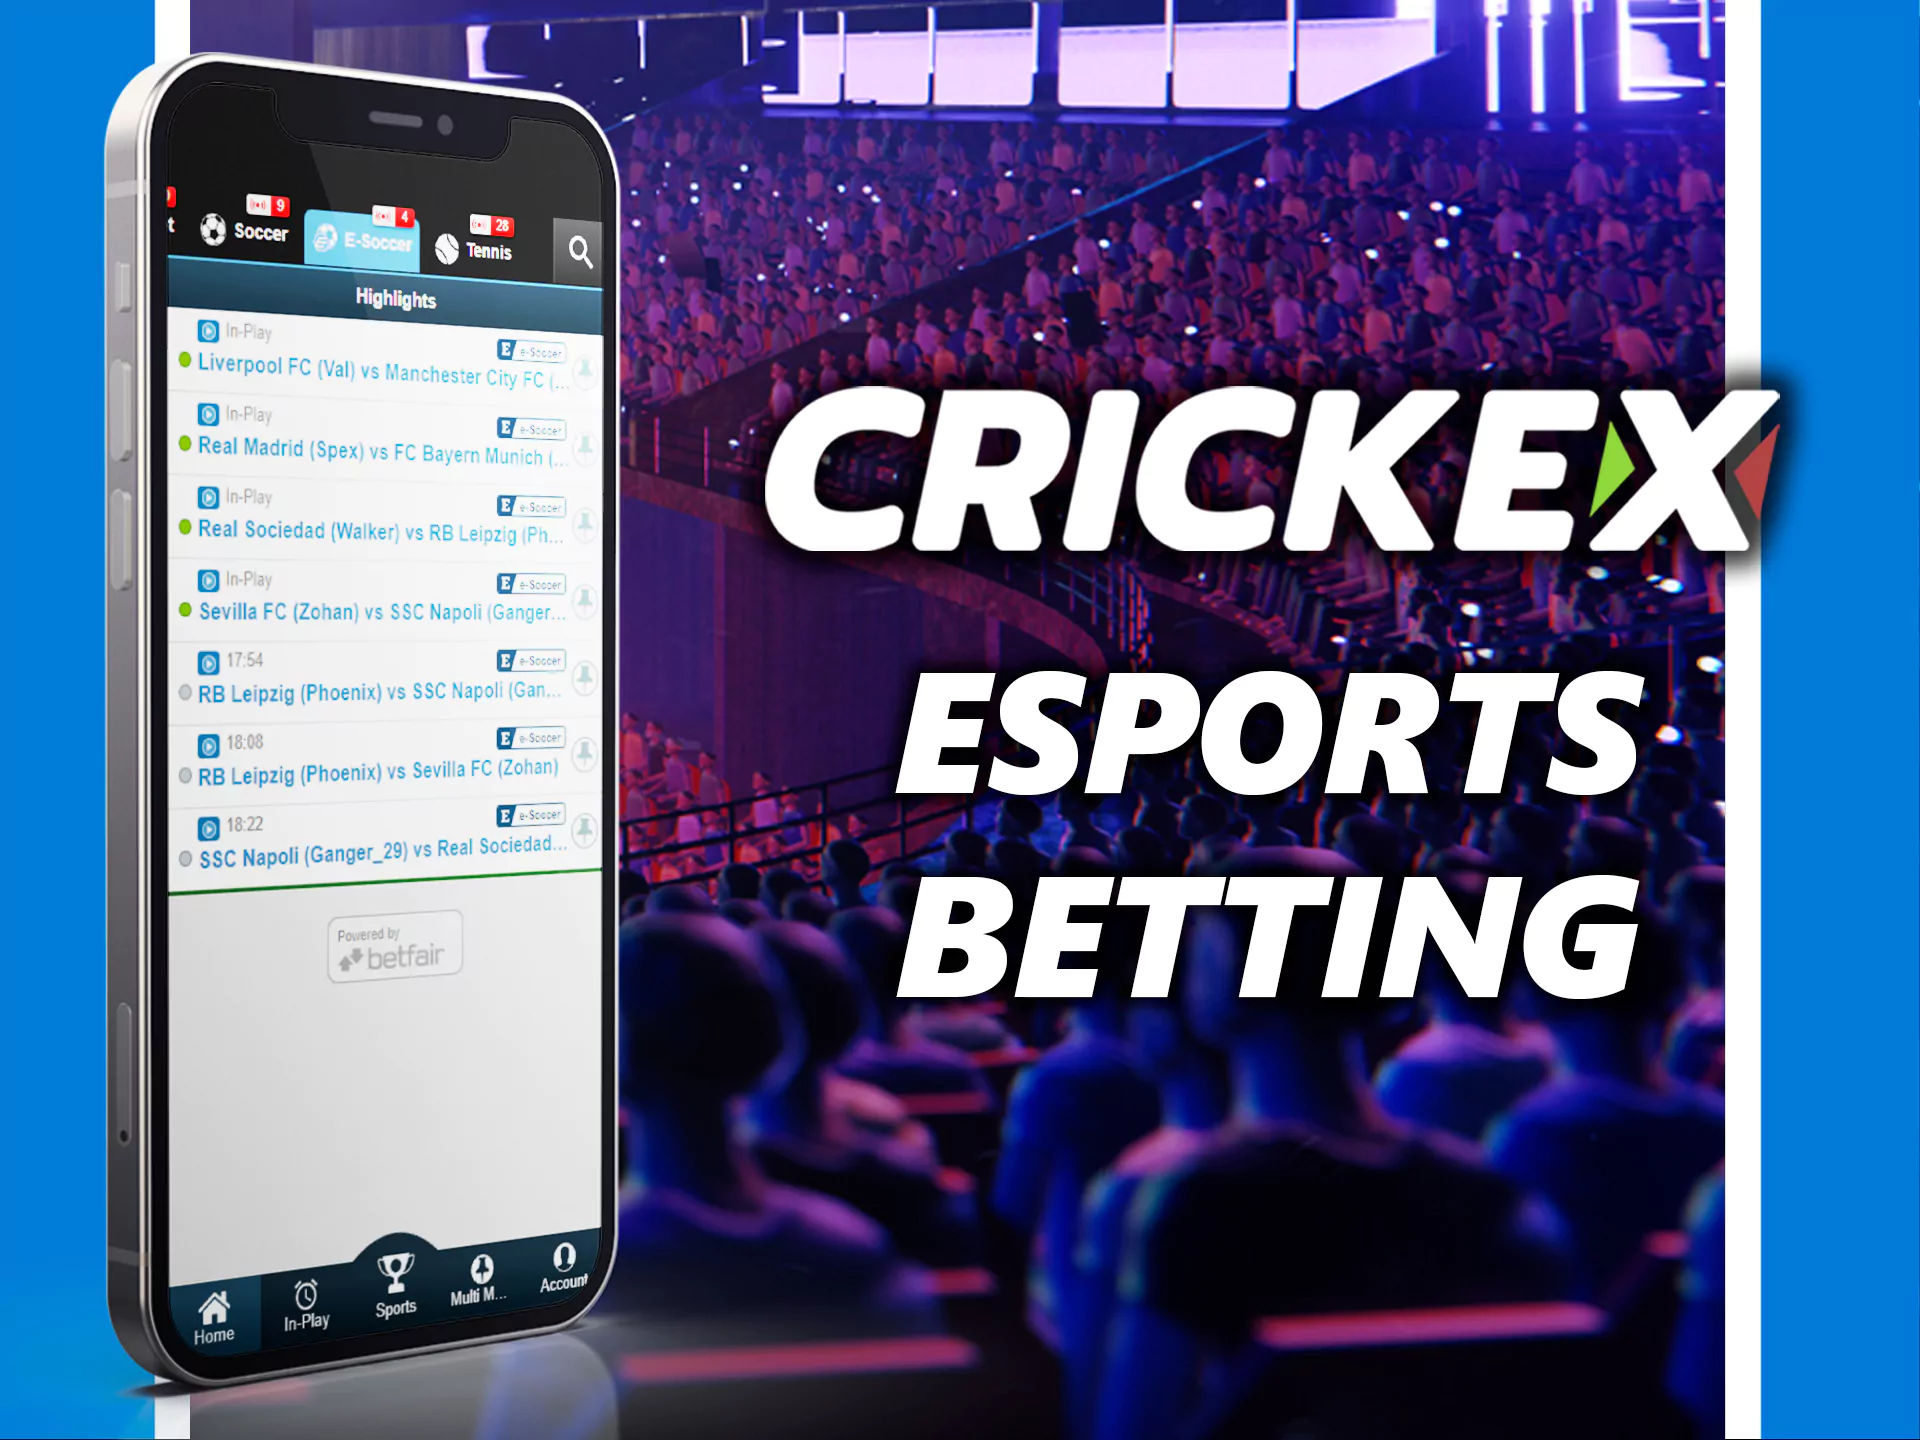 Cyber sports betting is popular in the Crickex app.